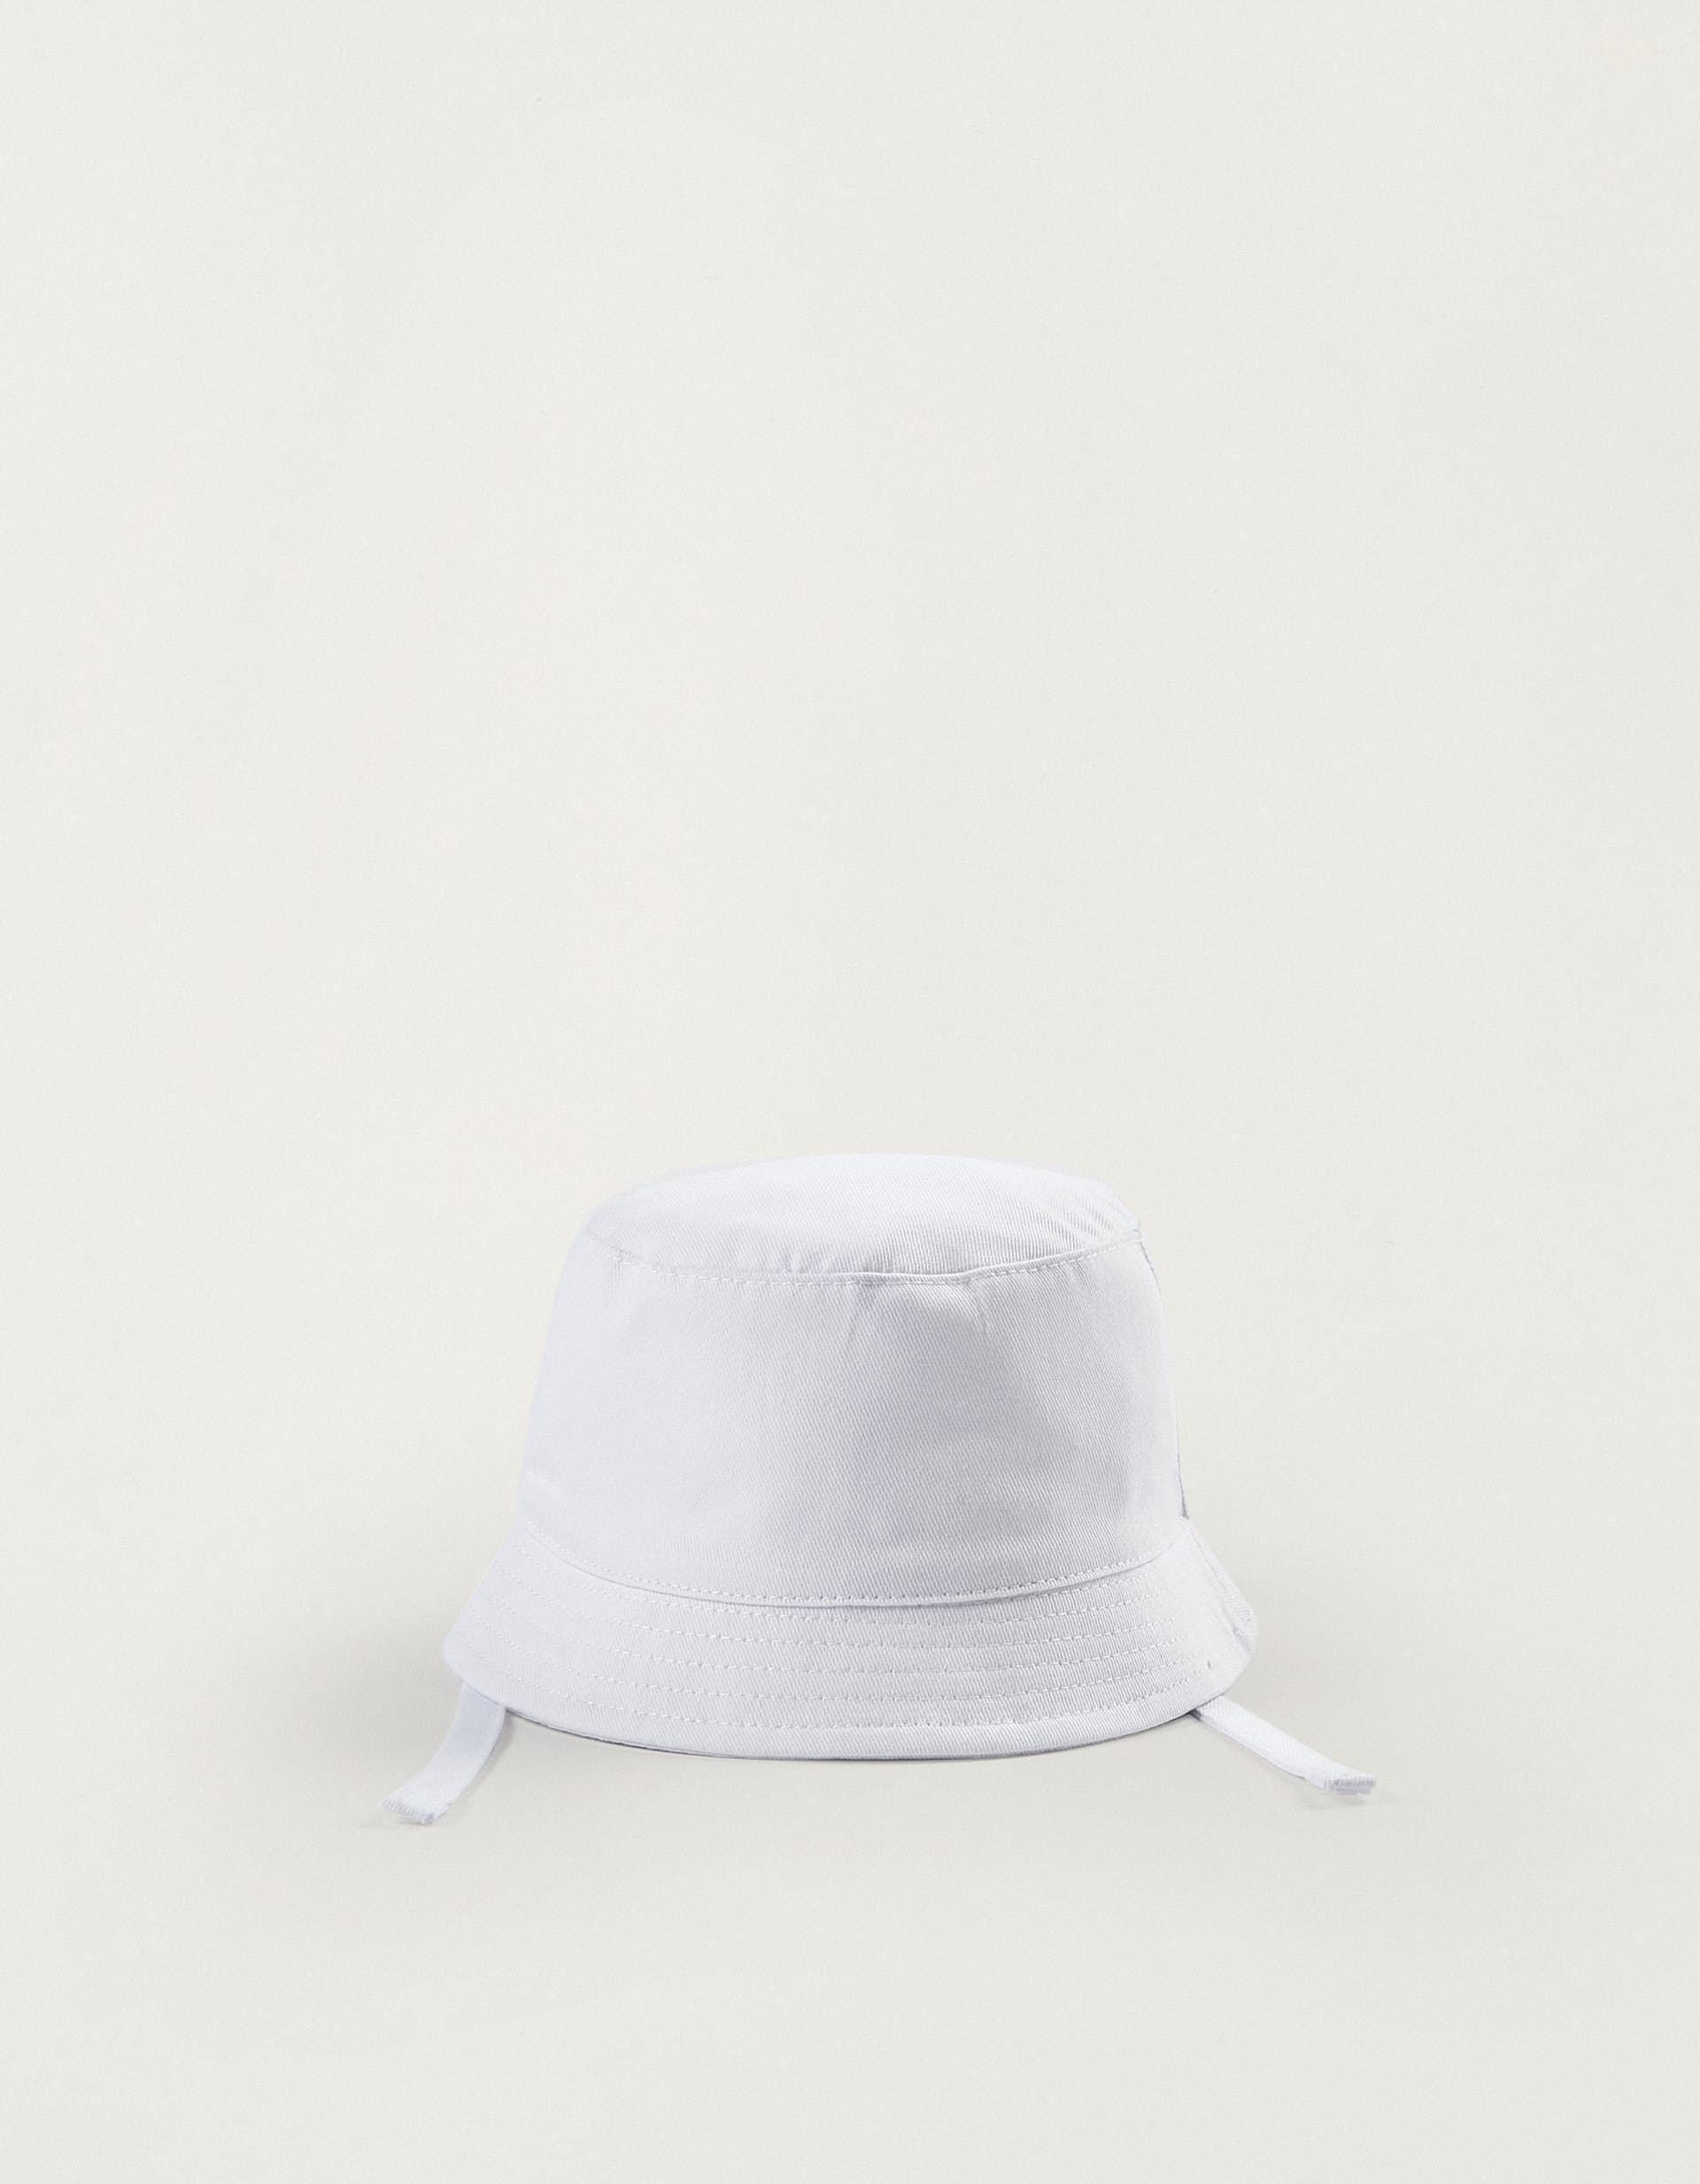 Zippy - White Twill Hat, Baby Unisex